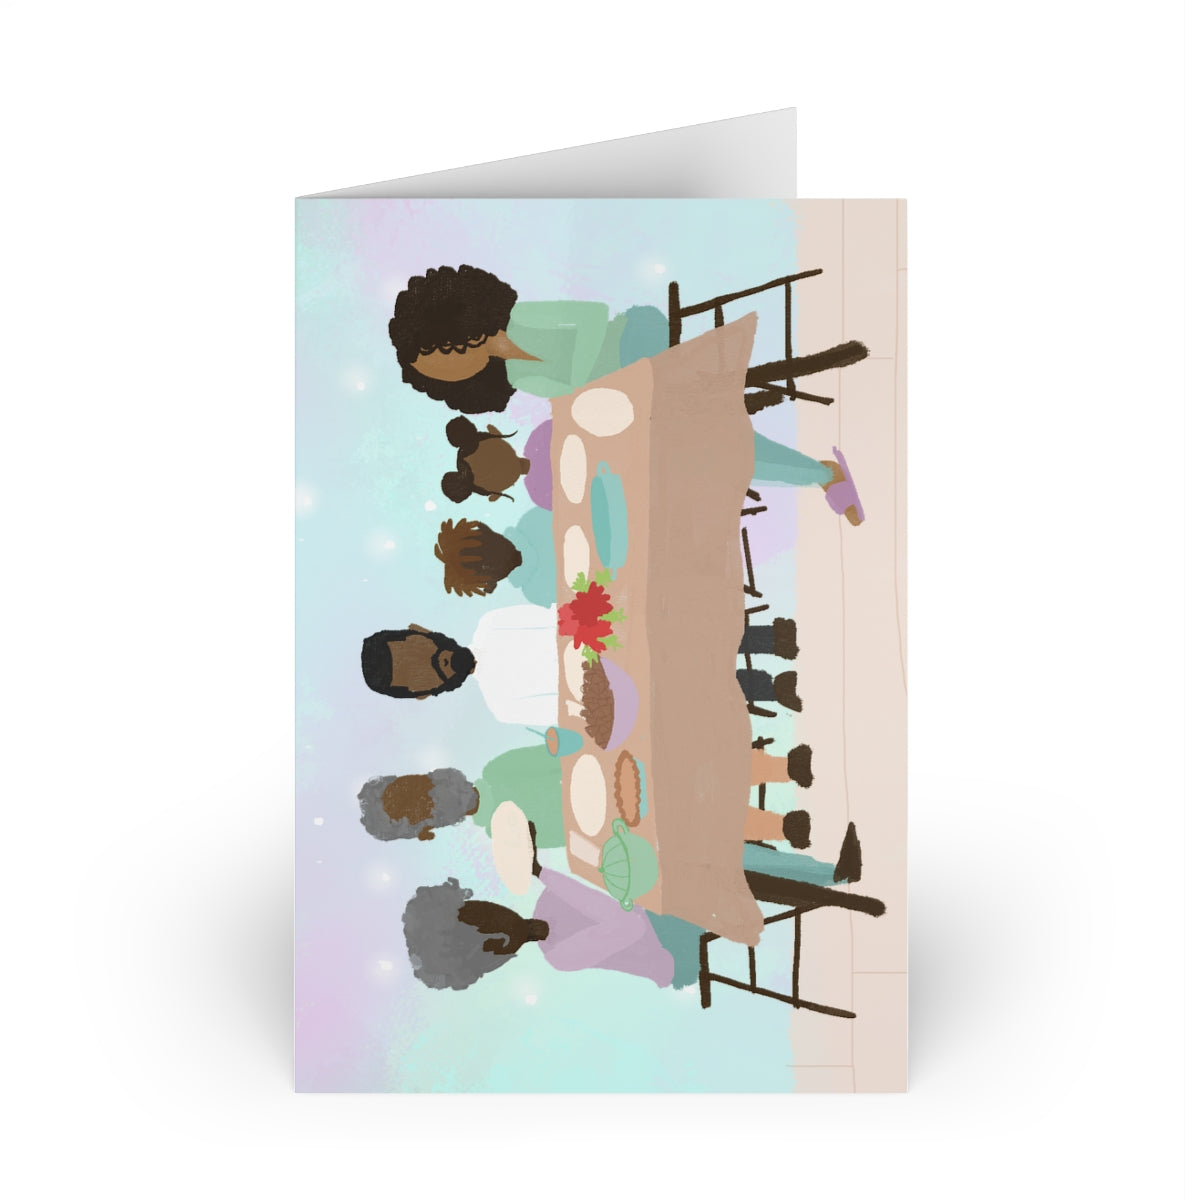 Black Family Christmas Card/ Black Greeting Cards | Holiday Greeting cards Greeting Cards (1 or 10-pcs)